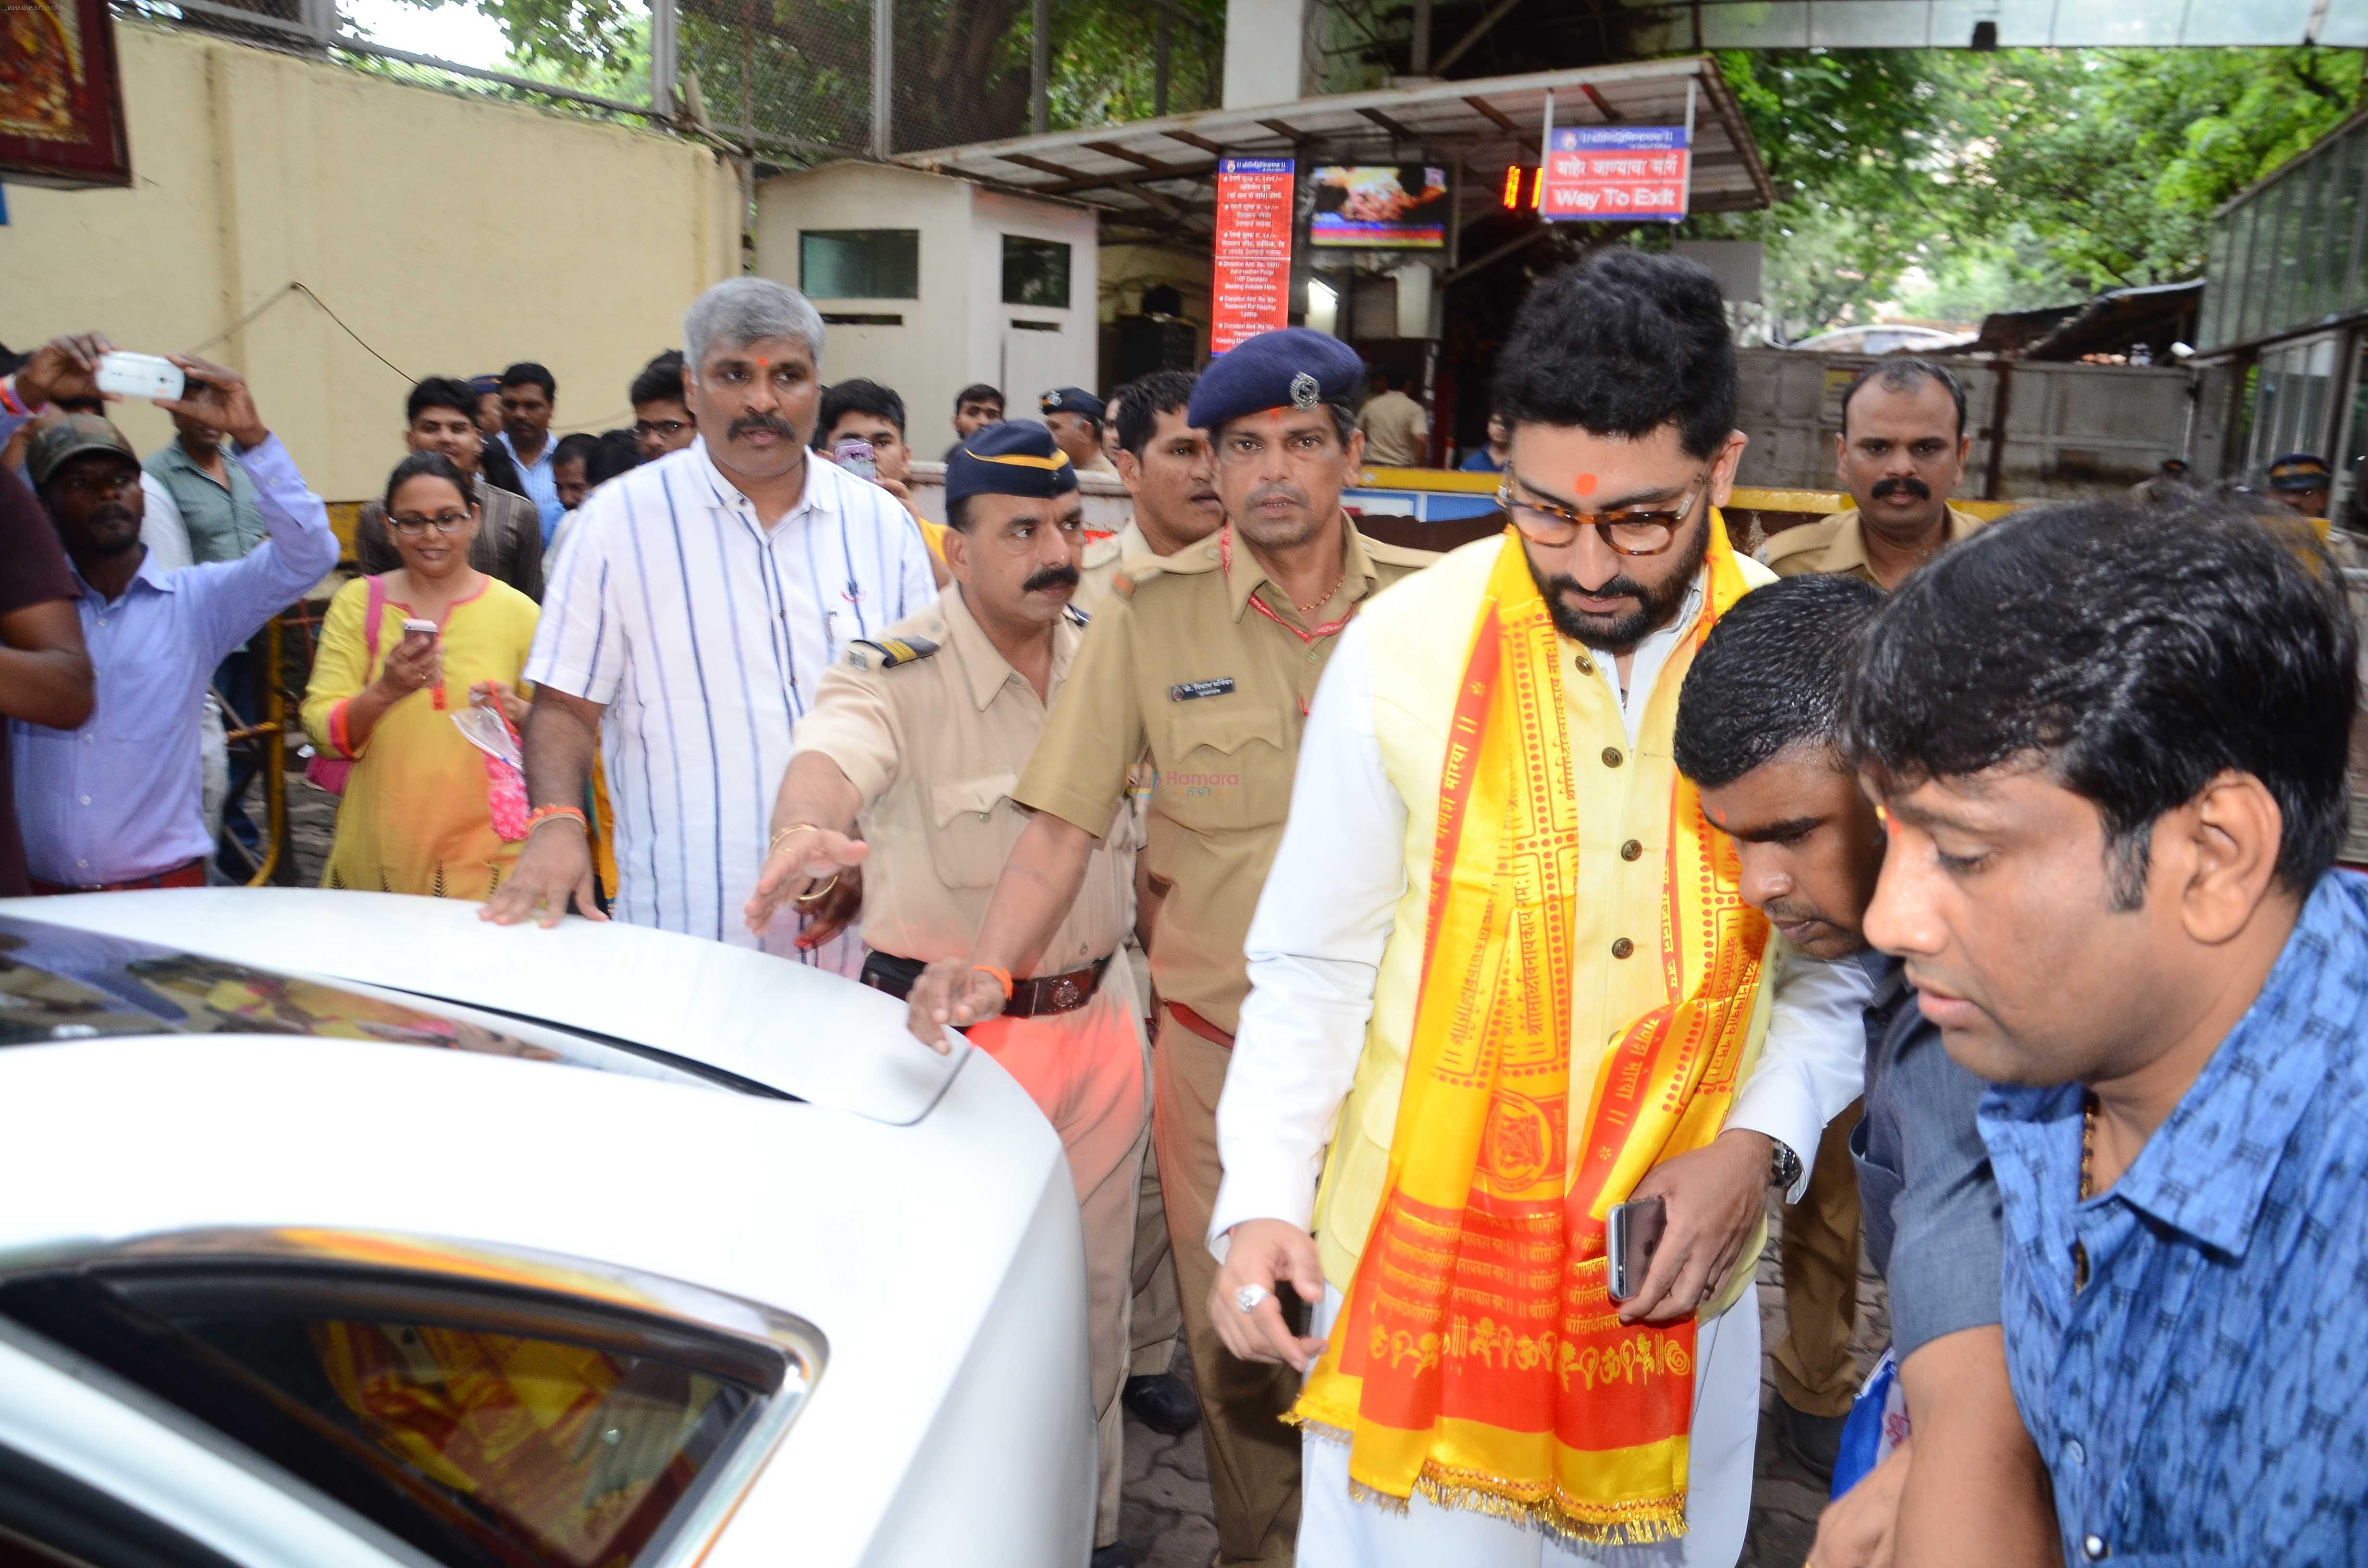 Abhishek Bachchan visits Siddhivinayak Temple, Mumbai on July 20, 2016